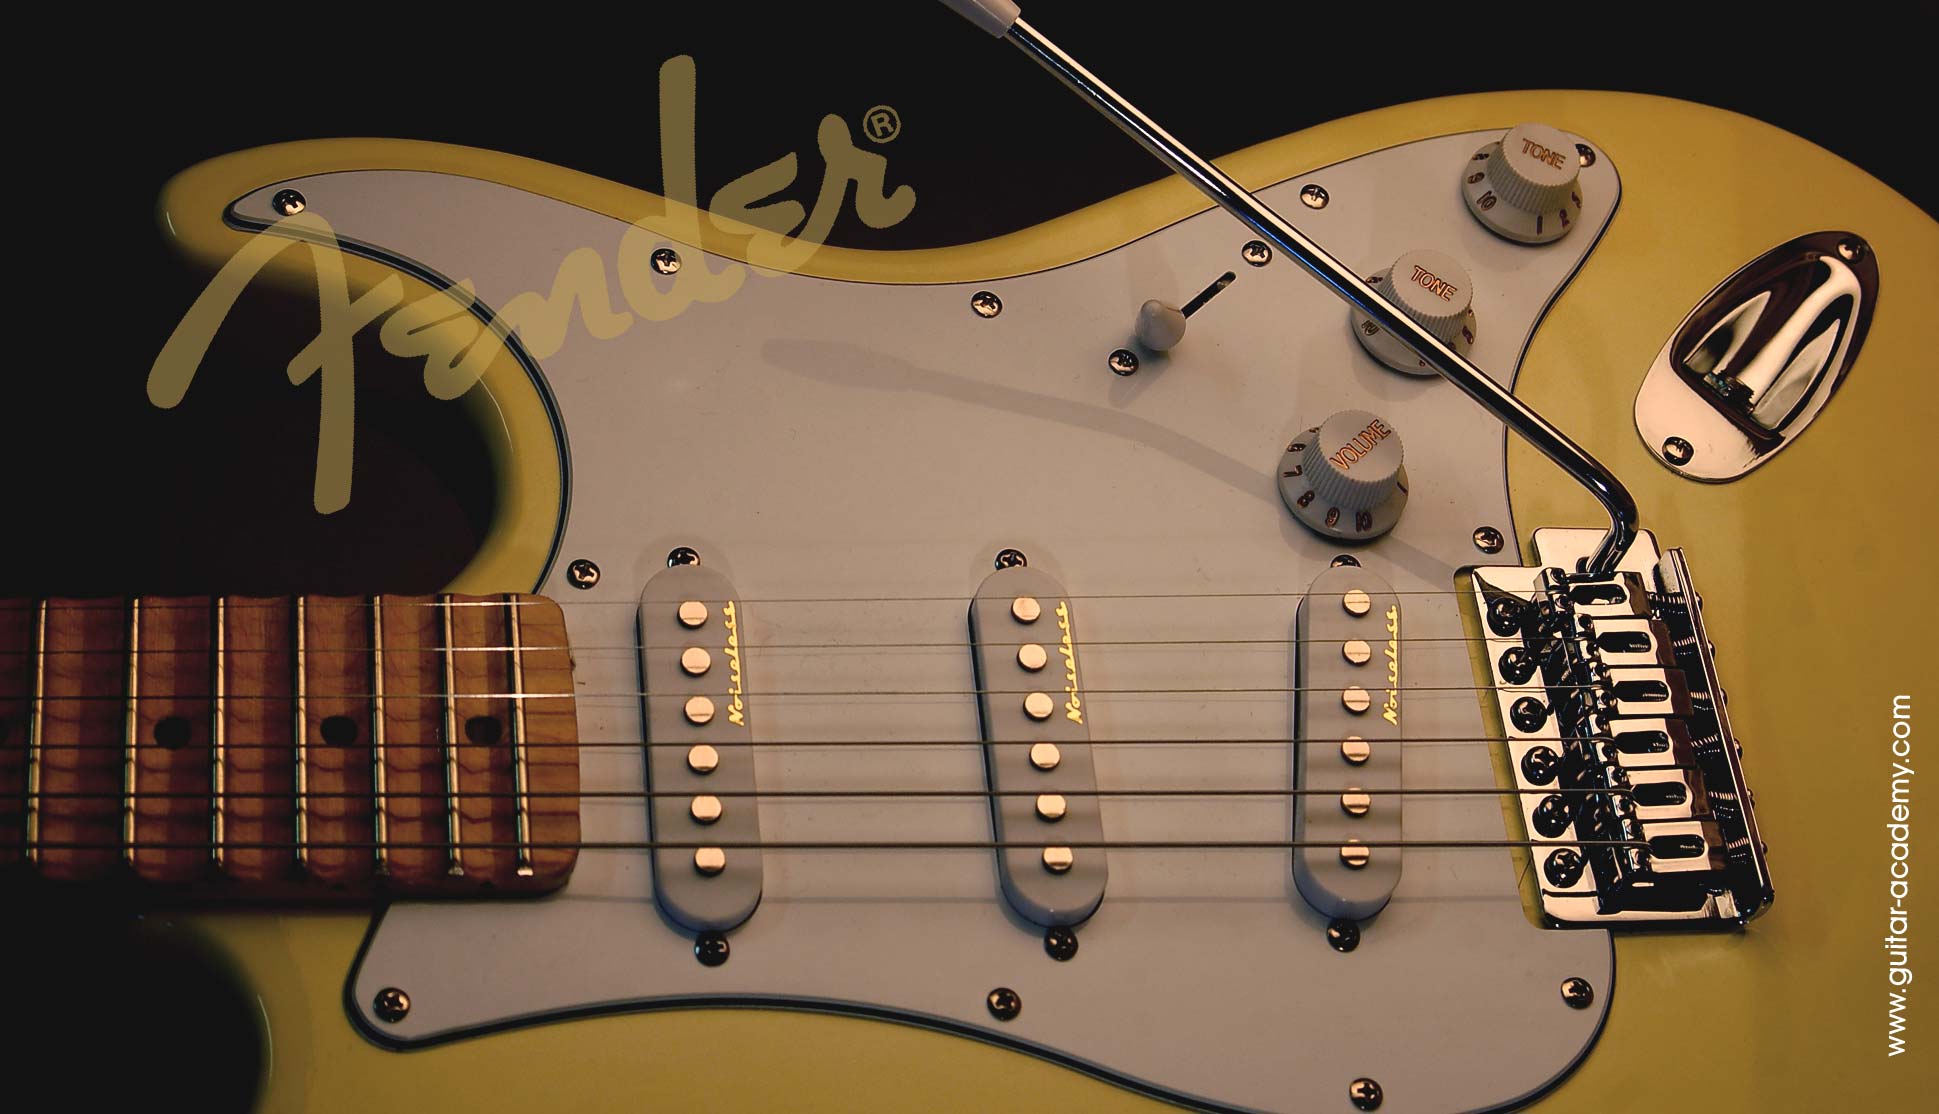 Fender Strat electric guitar, Yngwie Malmsteen